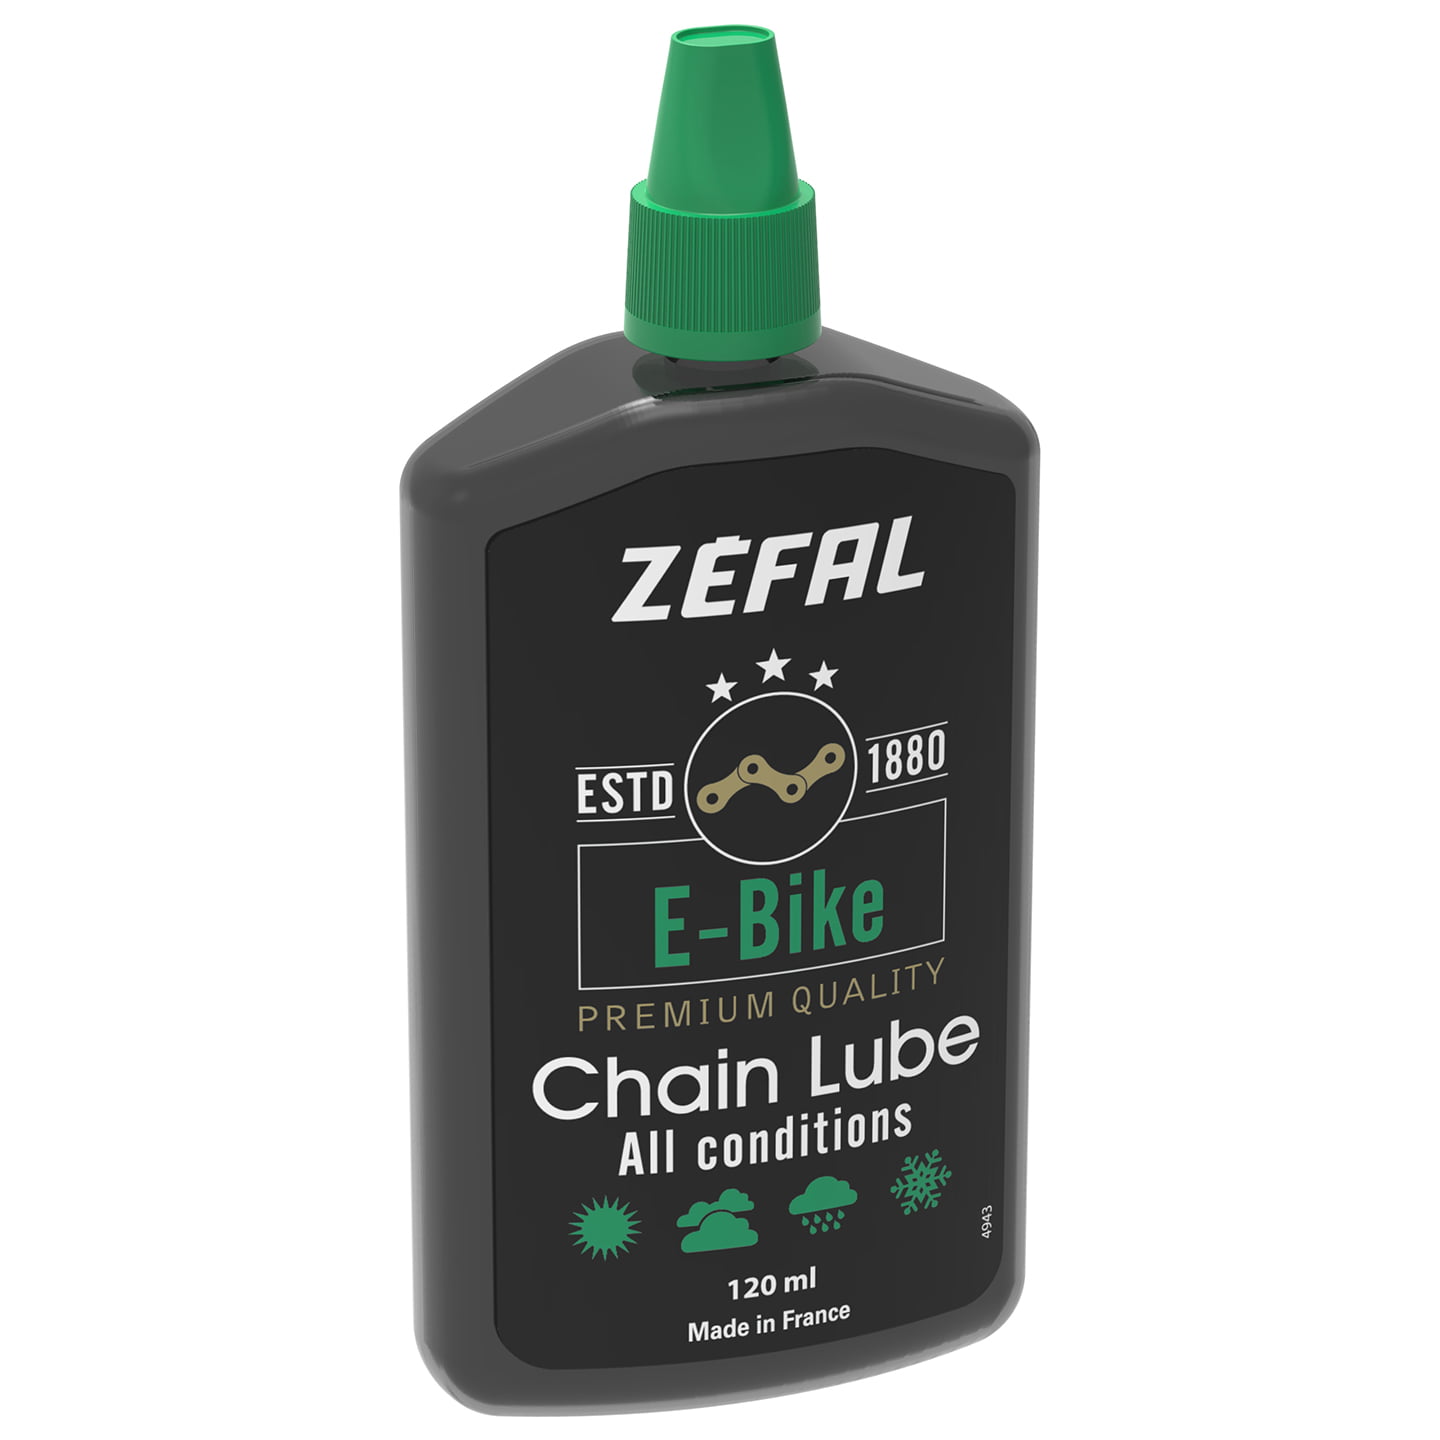 ZEFAL E-Bike 120 ml Chain Lube, Bike accessories